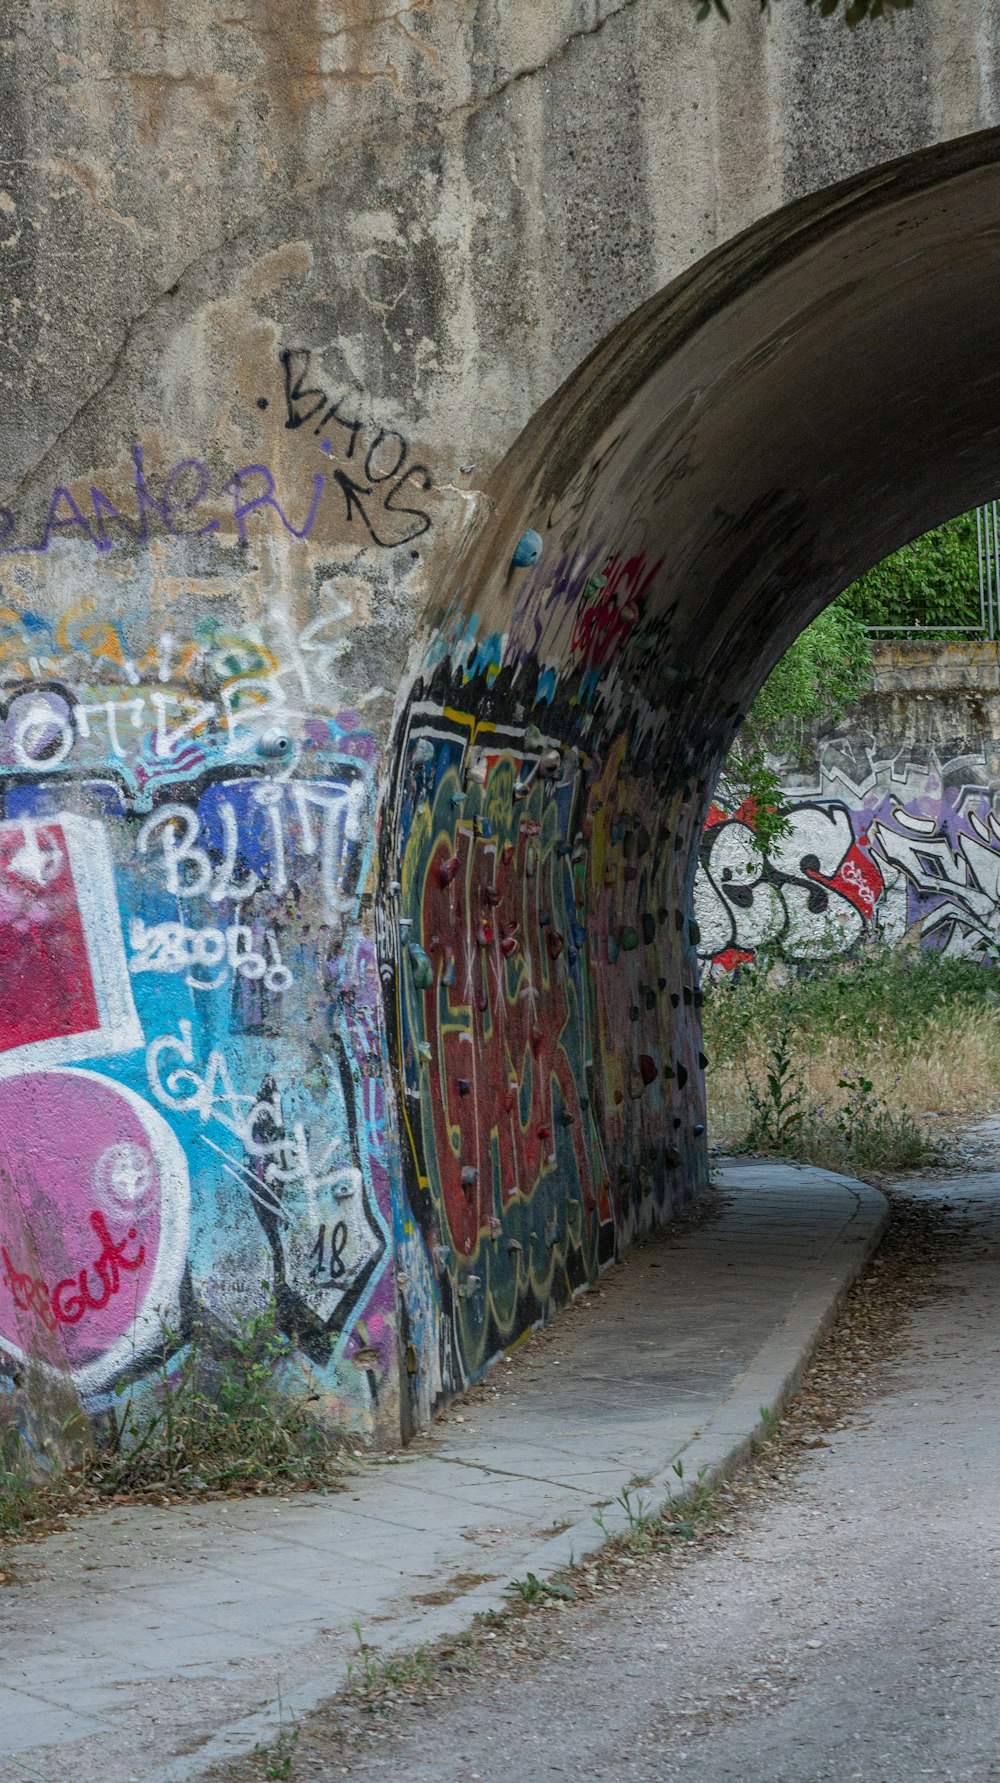 a man riding a skateboard under a bridge covered in graffiti